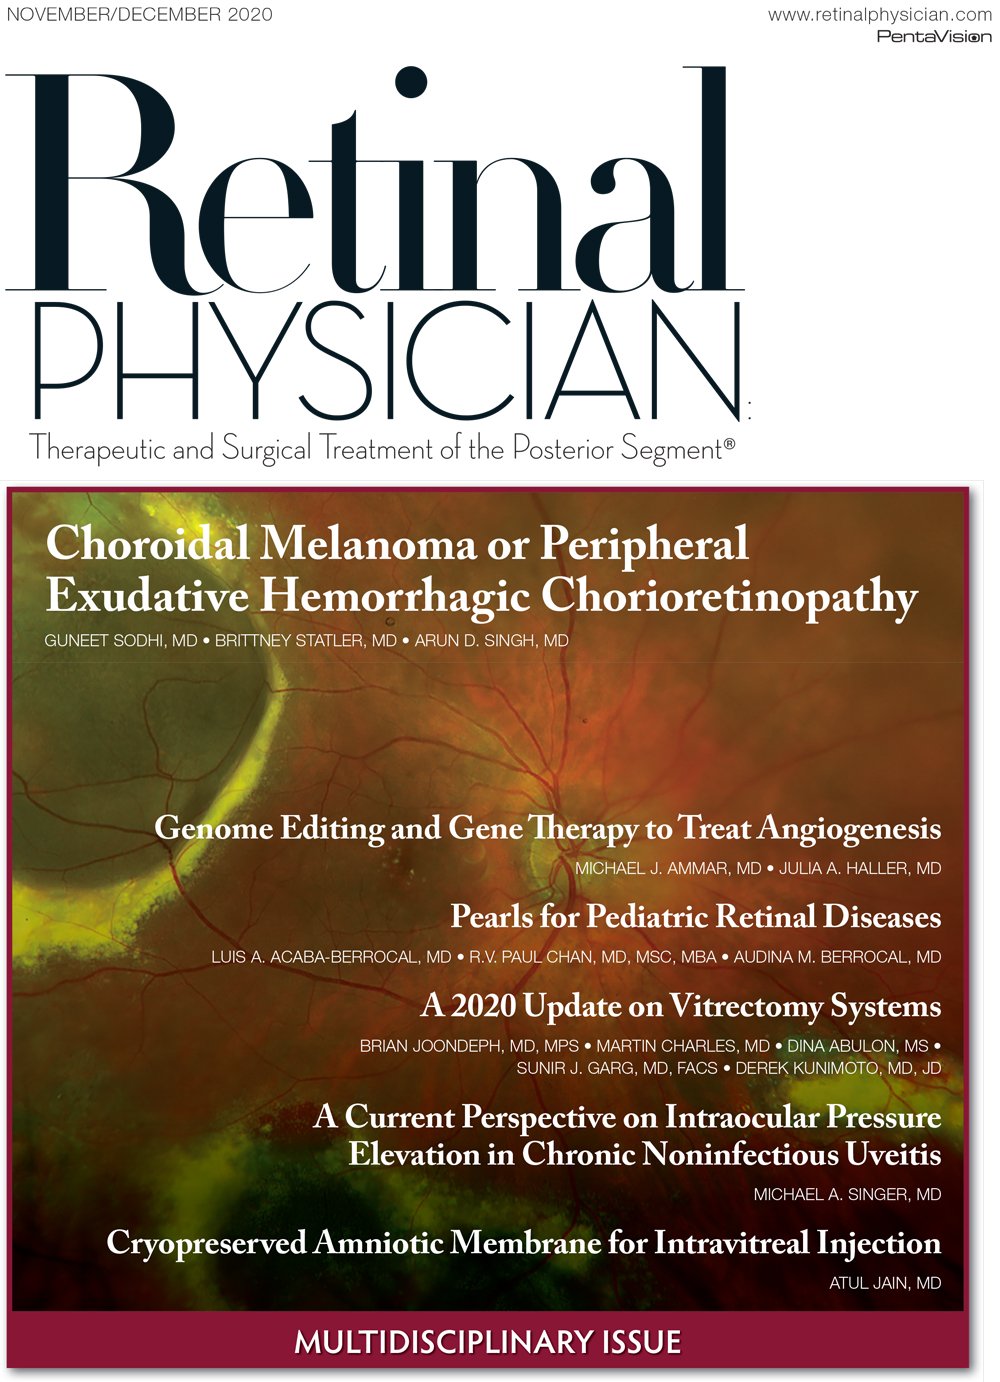 Retinal Physician November/December 2020 image